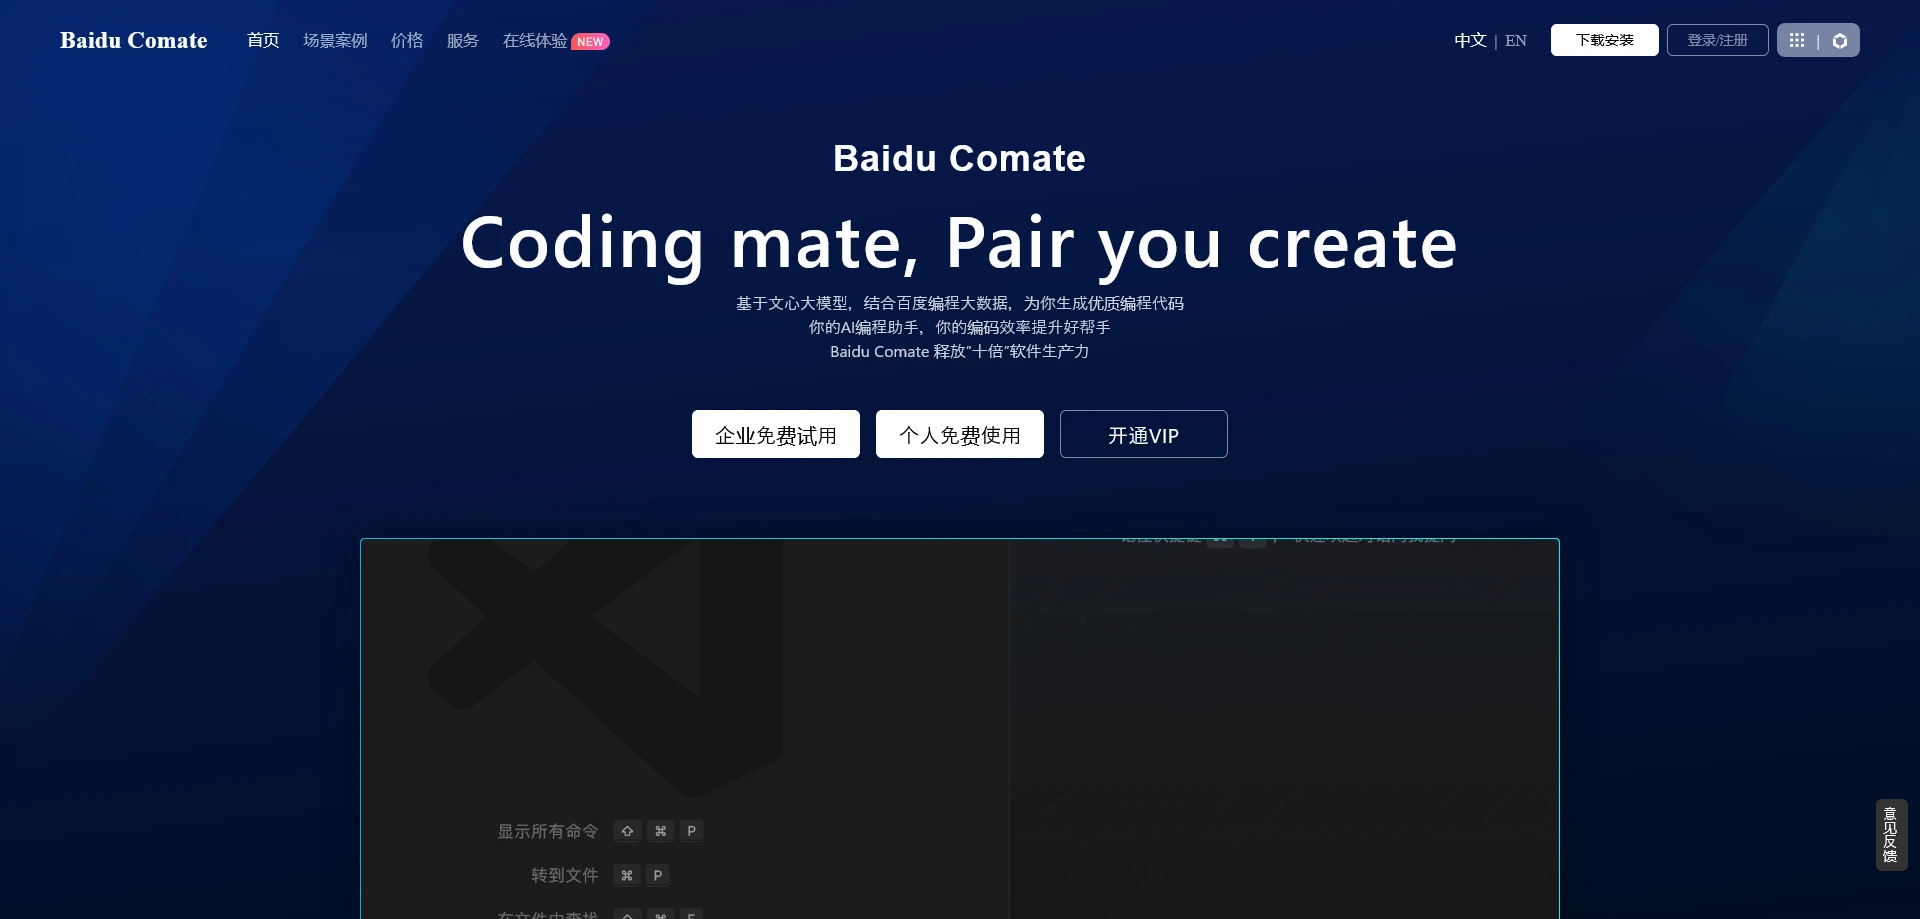 AI工具与服务推荐 - Baidu Comate - AI编程助手 - 特色图片